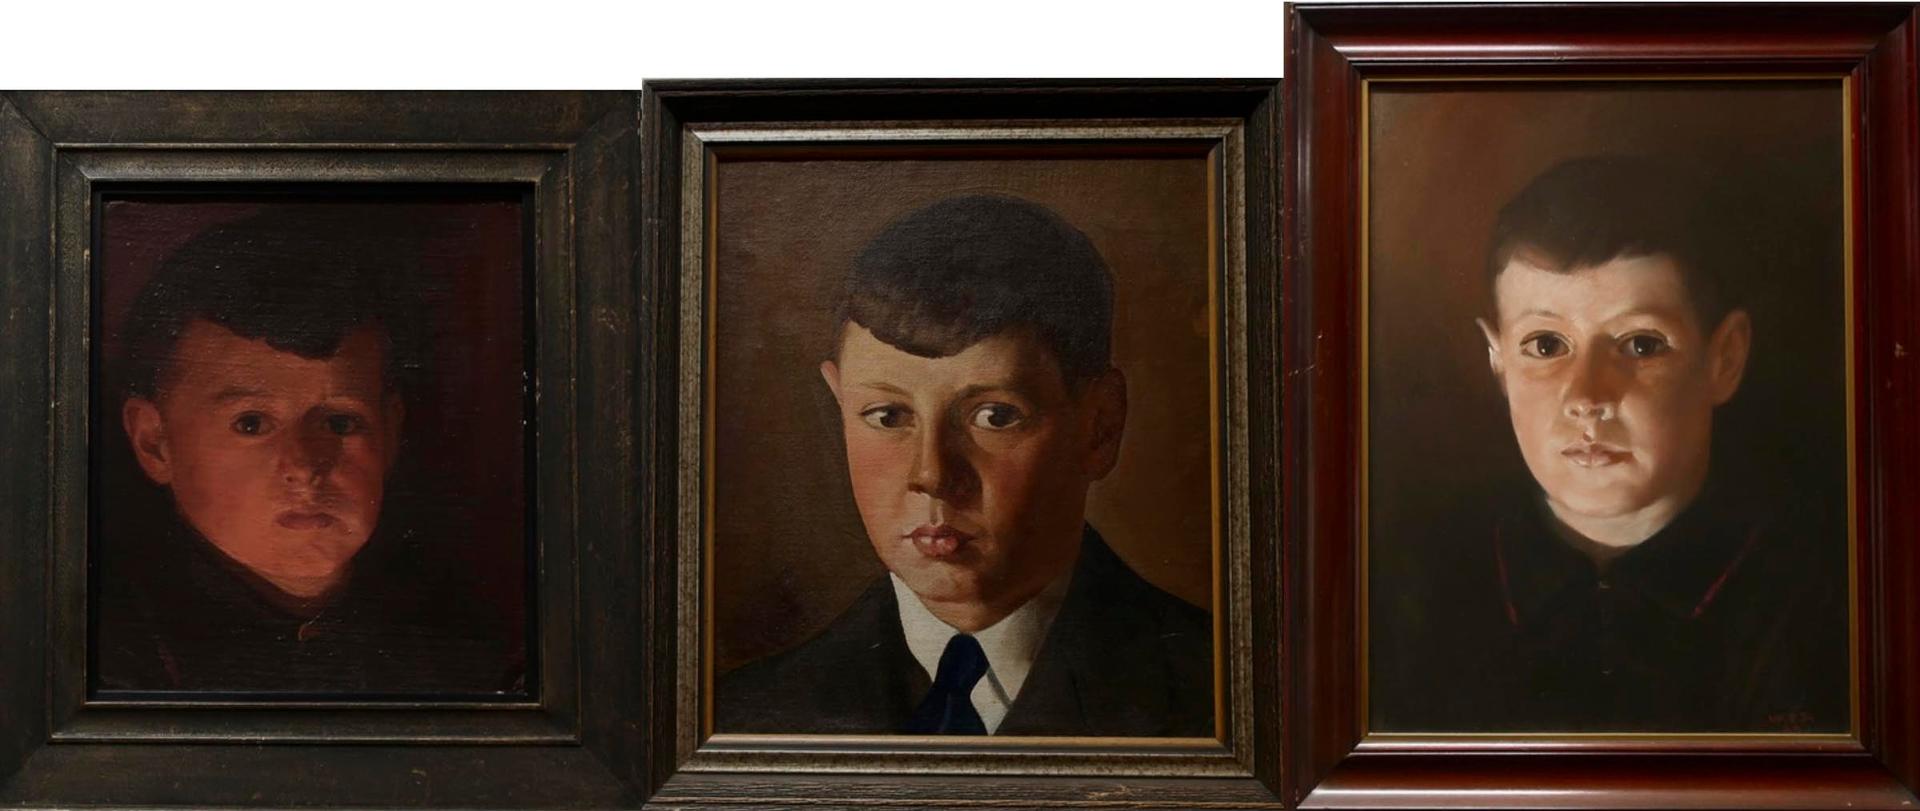 Wesley Flinn - Portraits Of A Young Boy